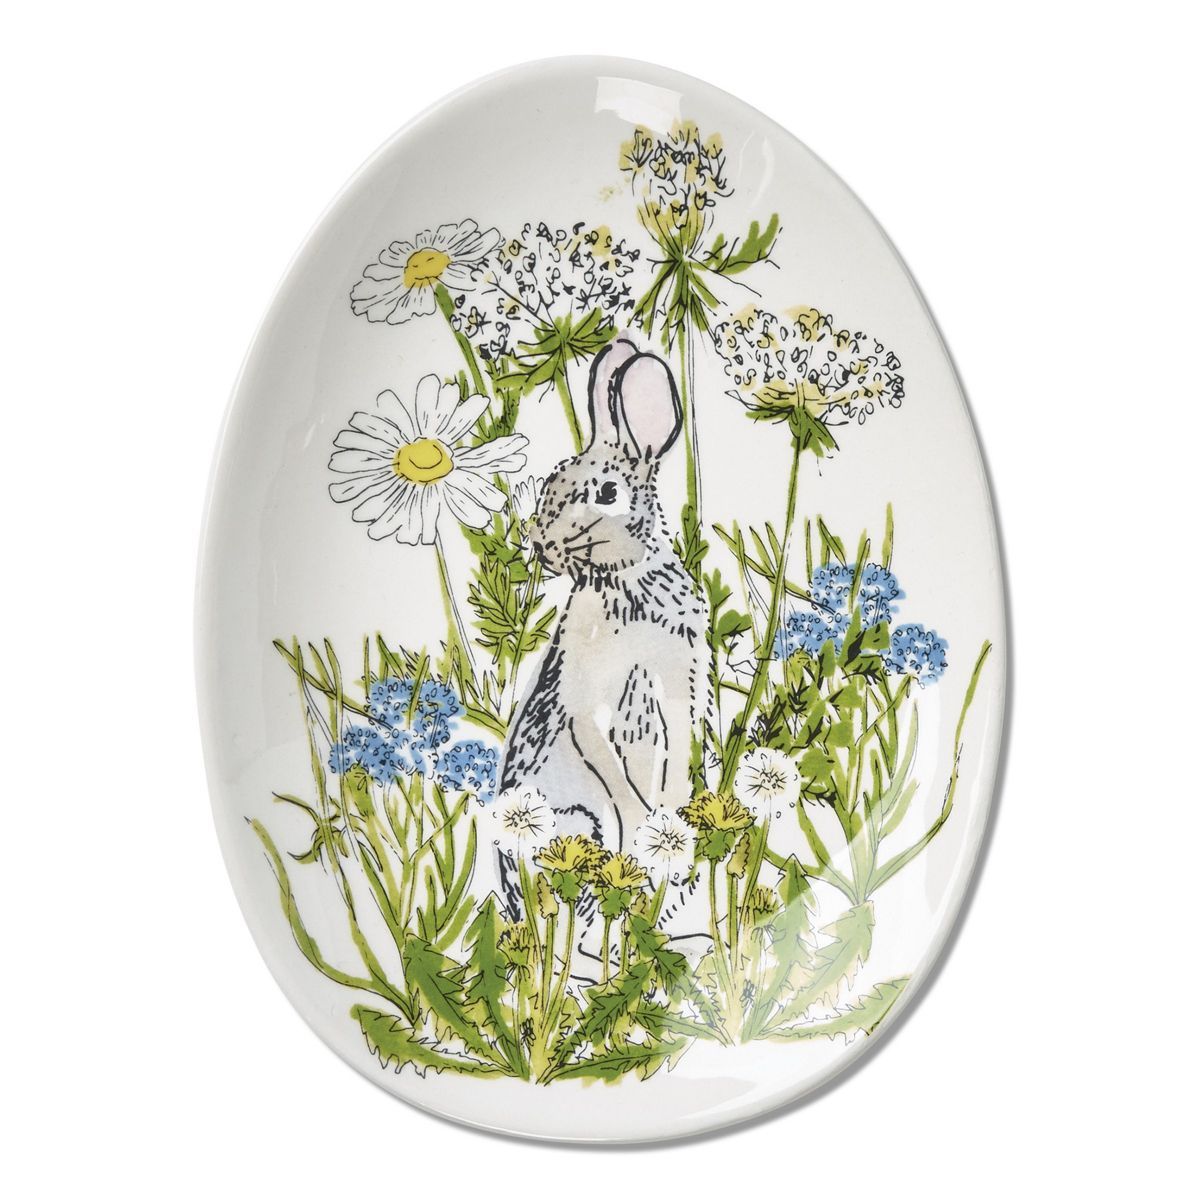 tagltd Garden Bunny Easter Plate | Target